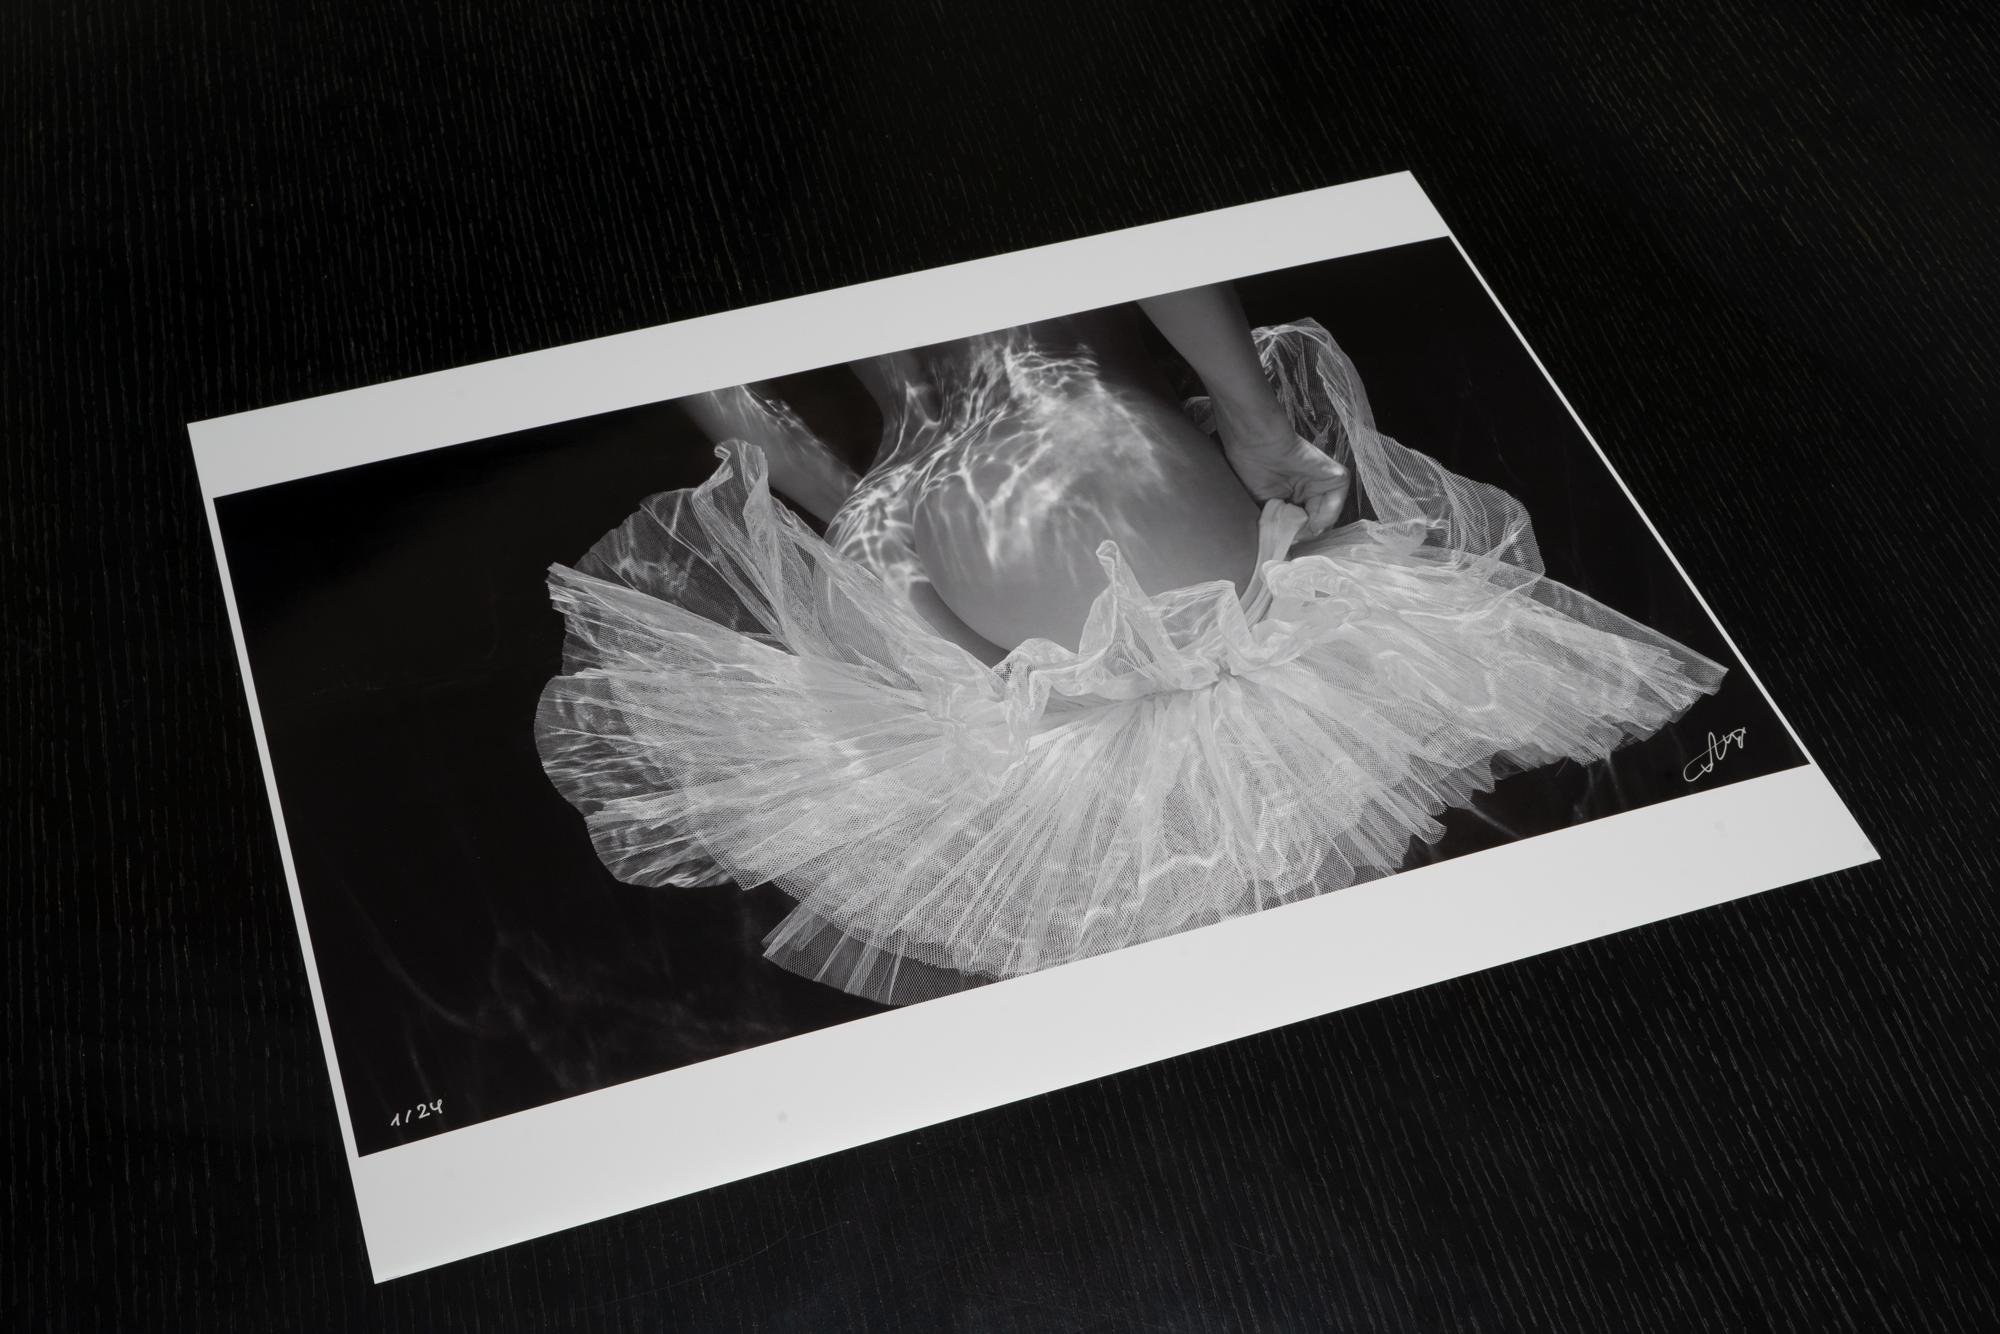 Tutu Skirt - underwater black & white nude photograph - print on paper 14 x 24